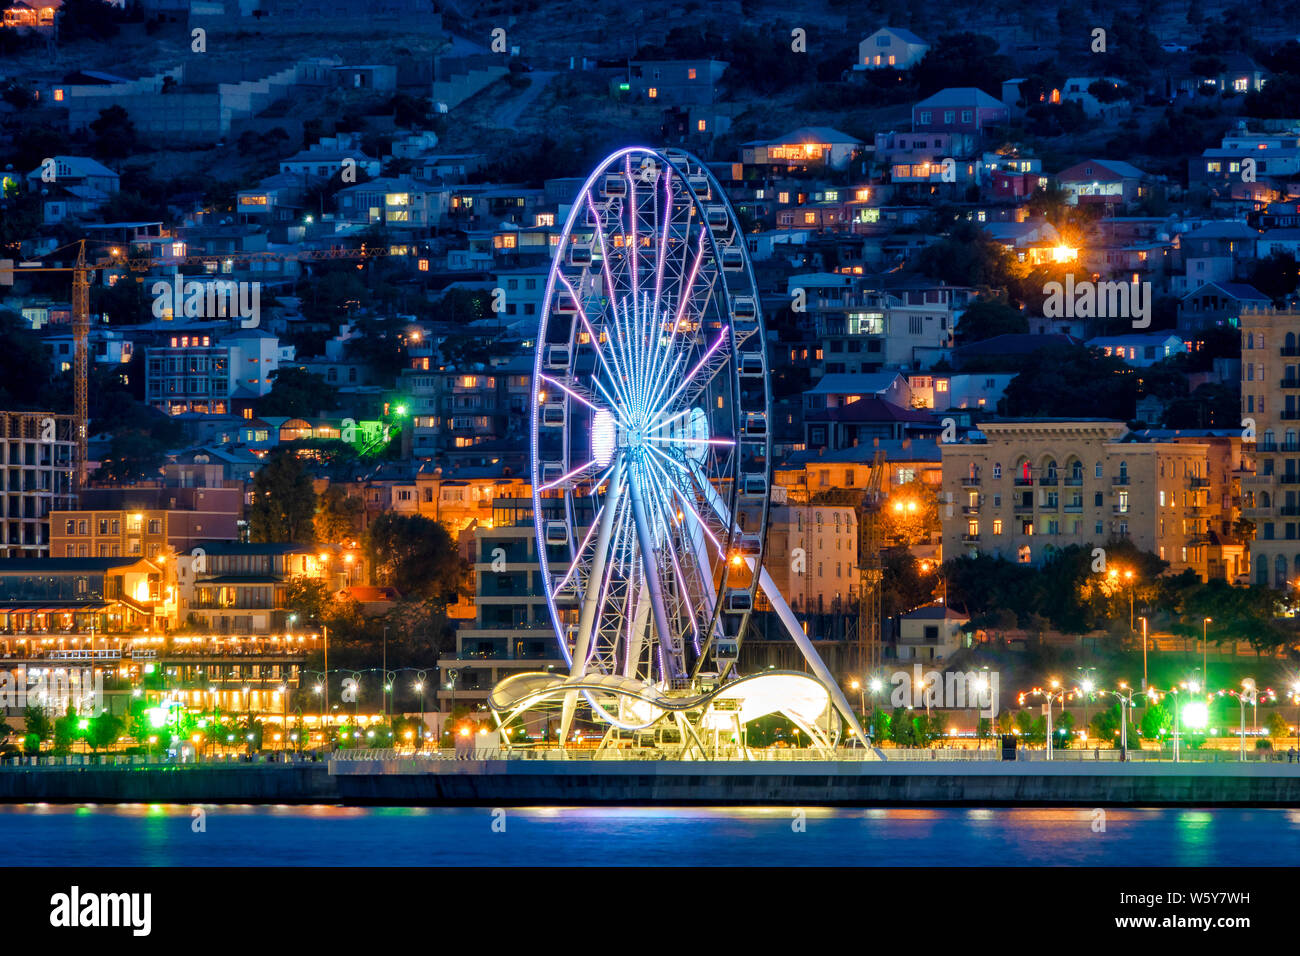 View of the Baku ferris wheel, Baku, Azerbaijan Stock Photo